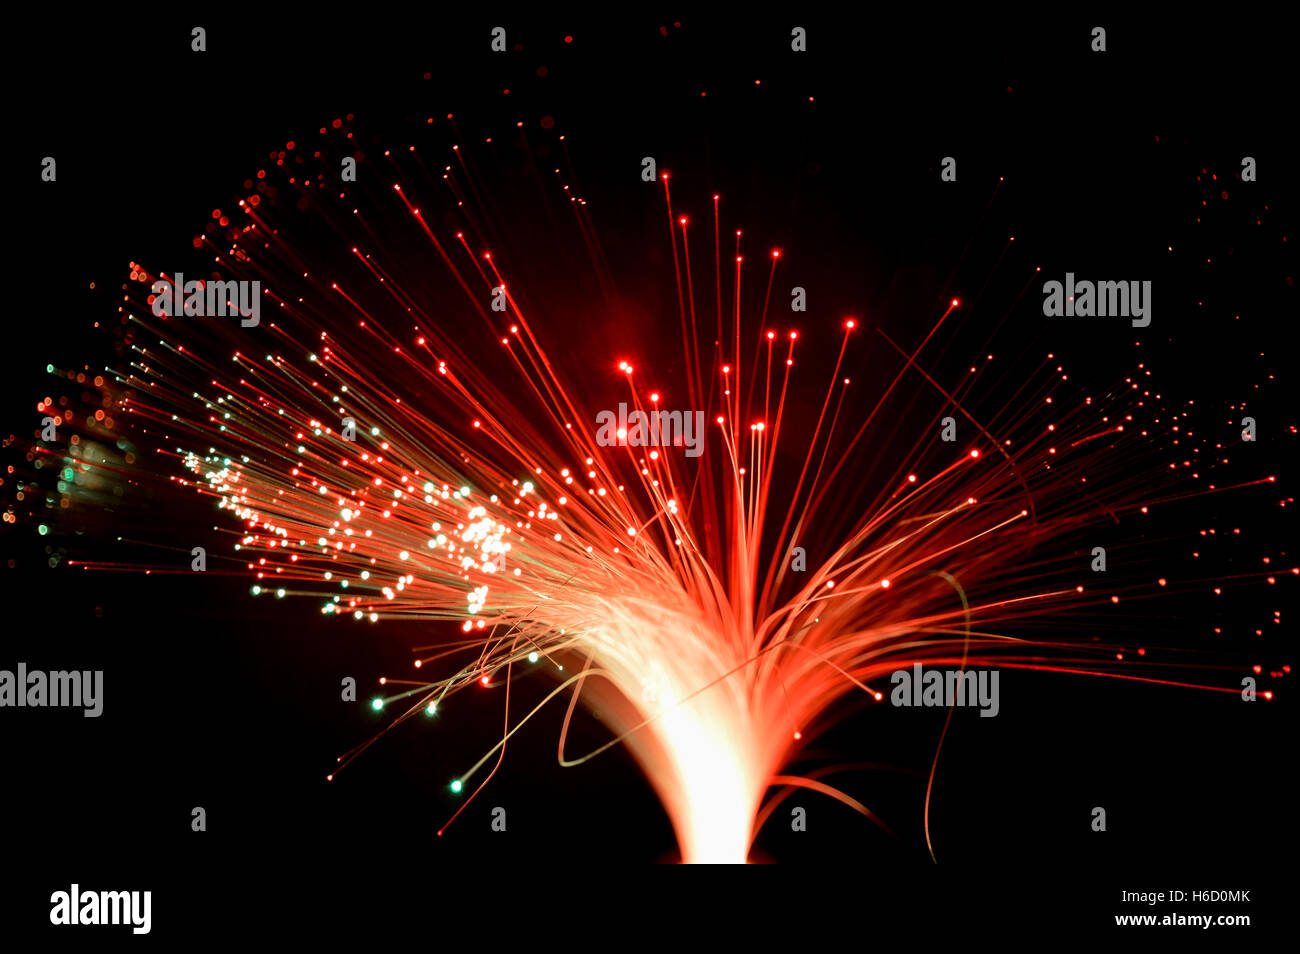 Abstract Internet technology fiber optic background Stock Photo